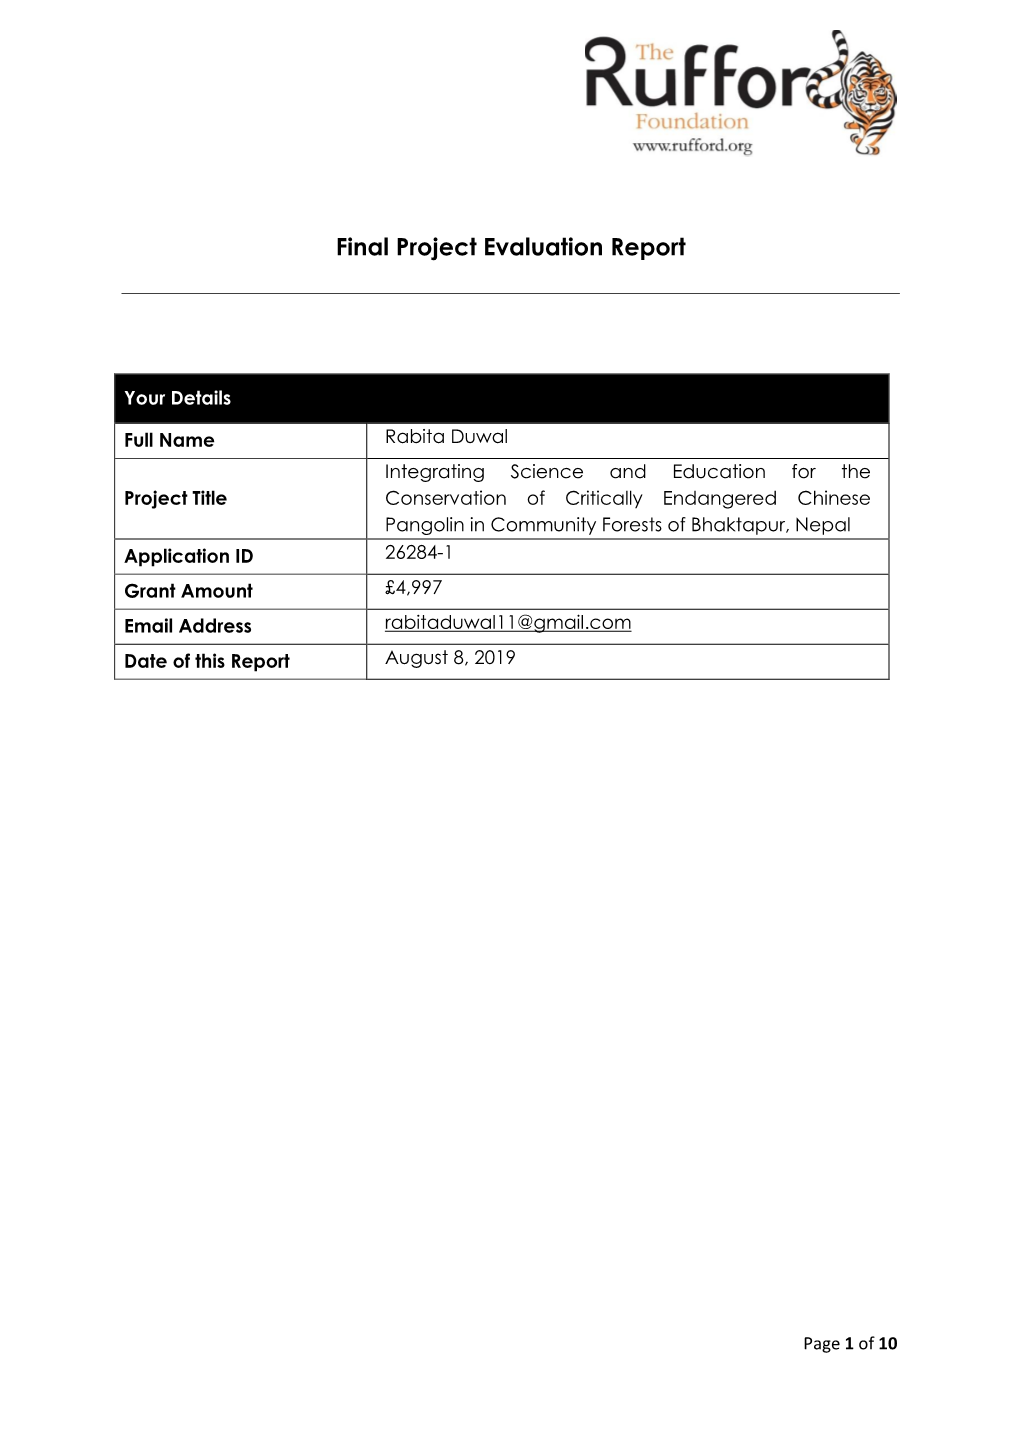 Final Evaluation Report